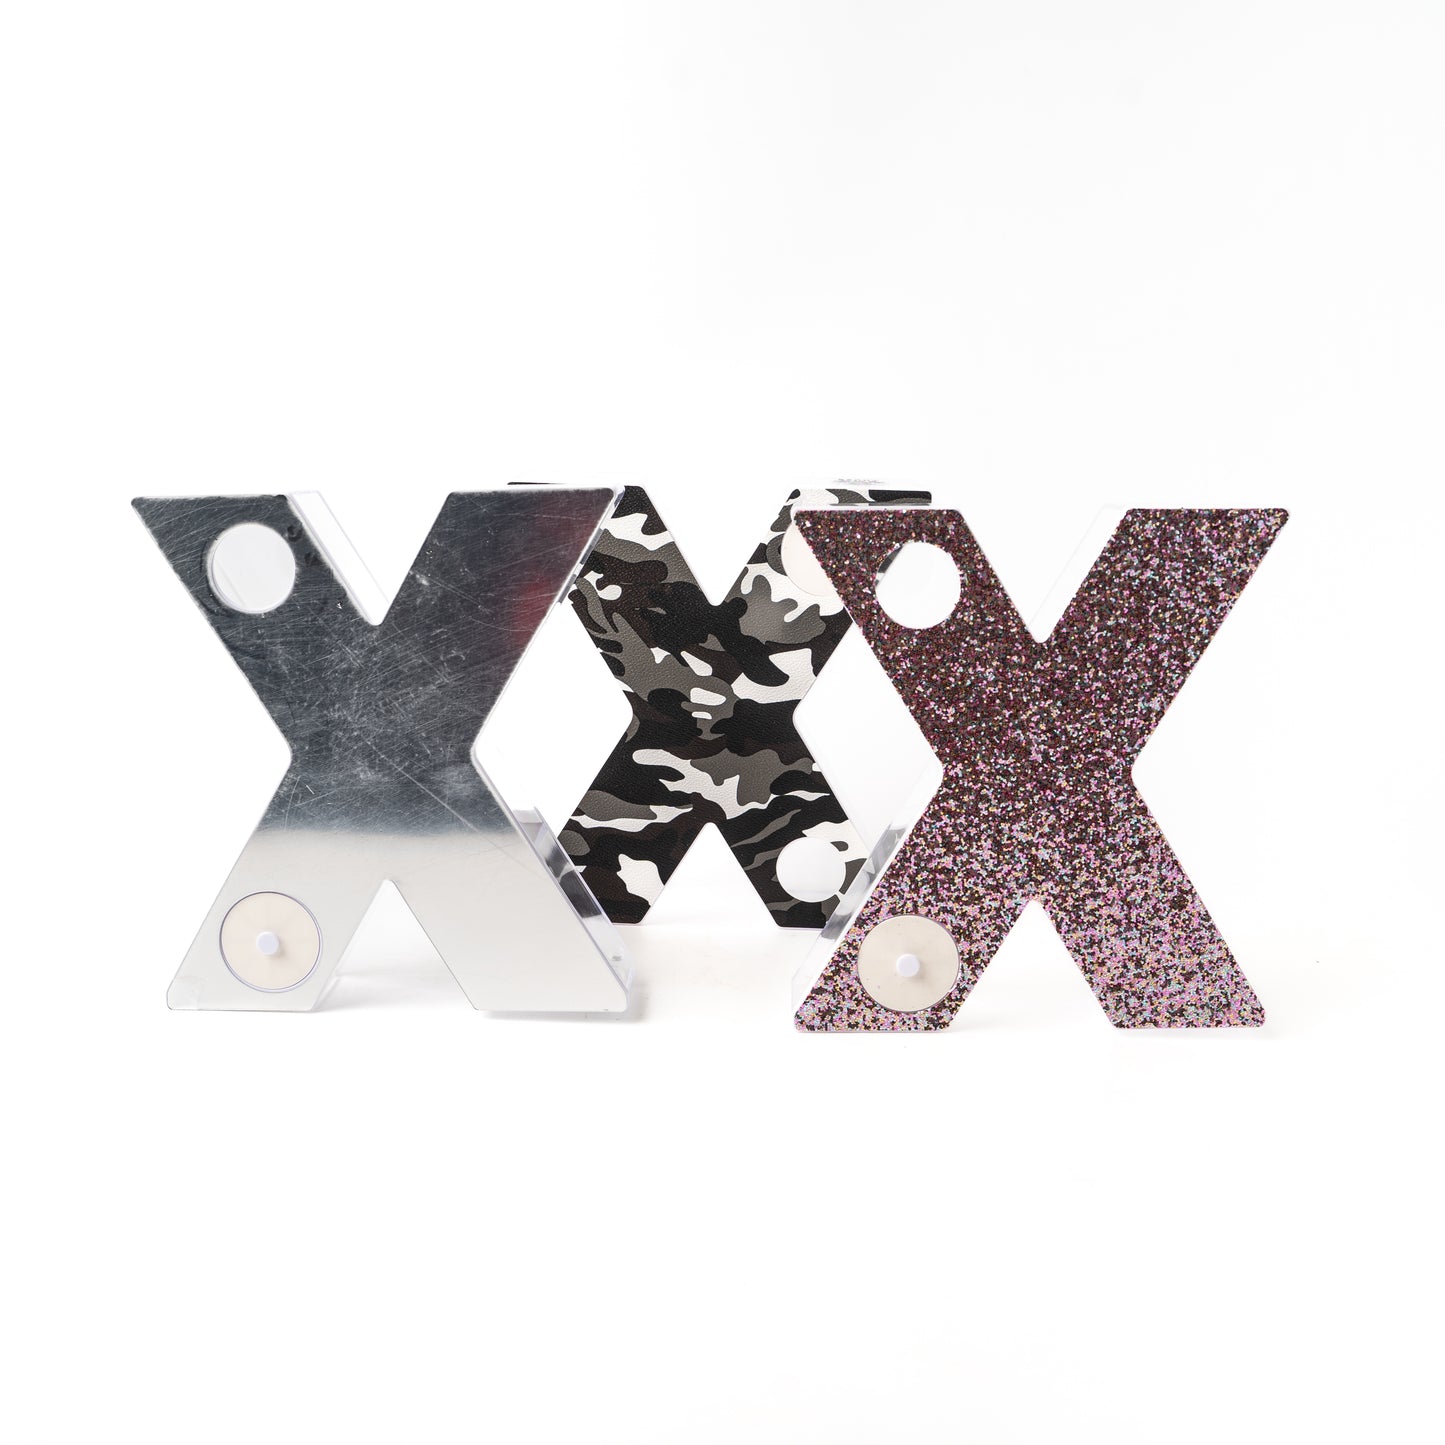 X Shape Car Hookah - Fancy Design (All Colors)